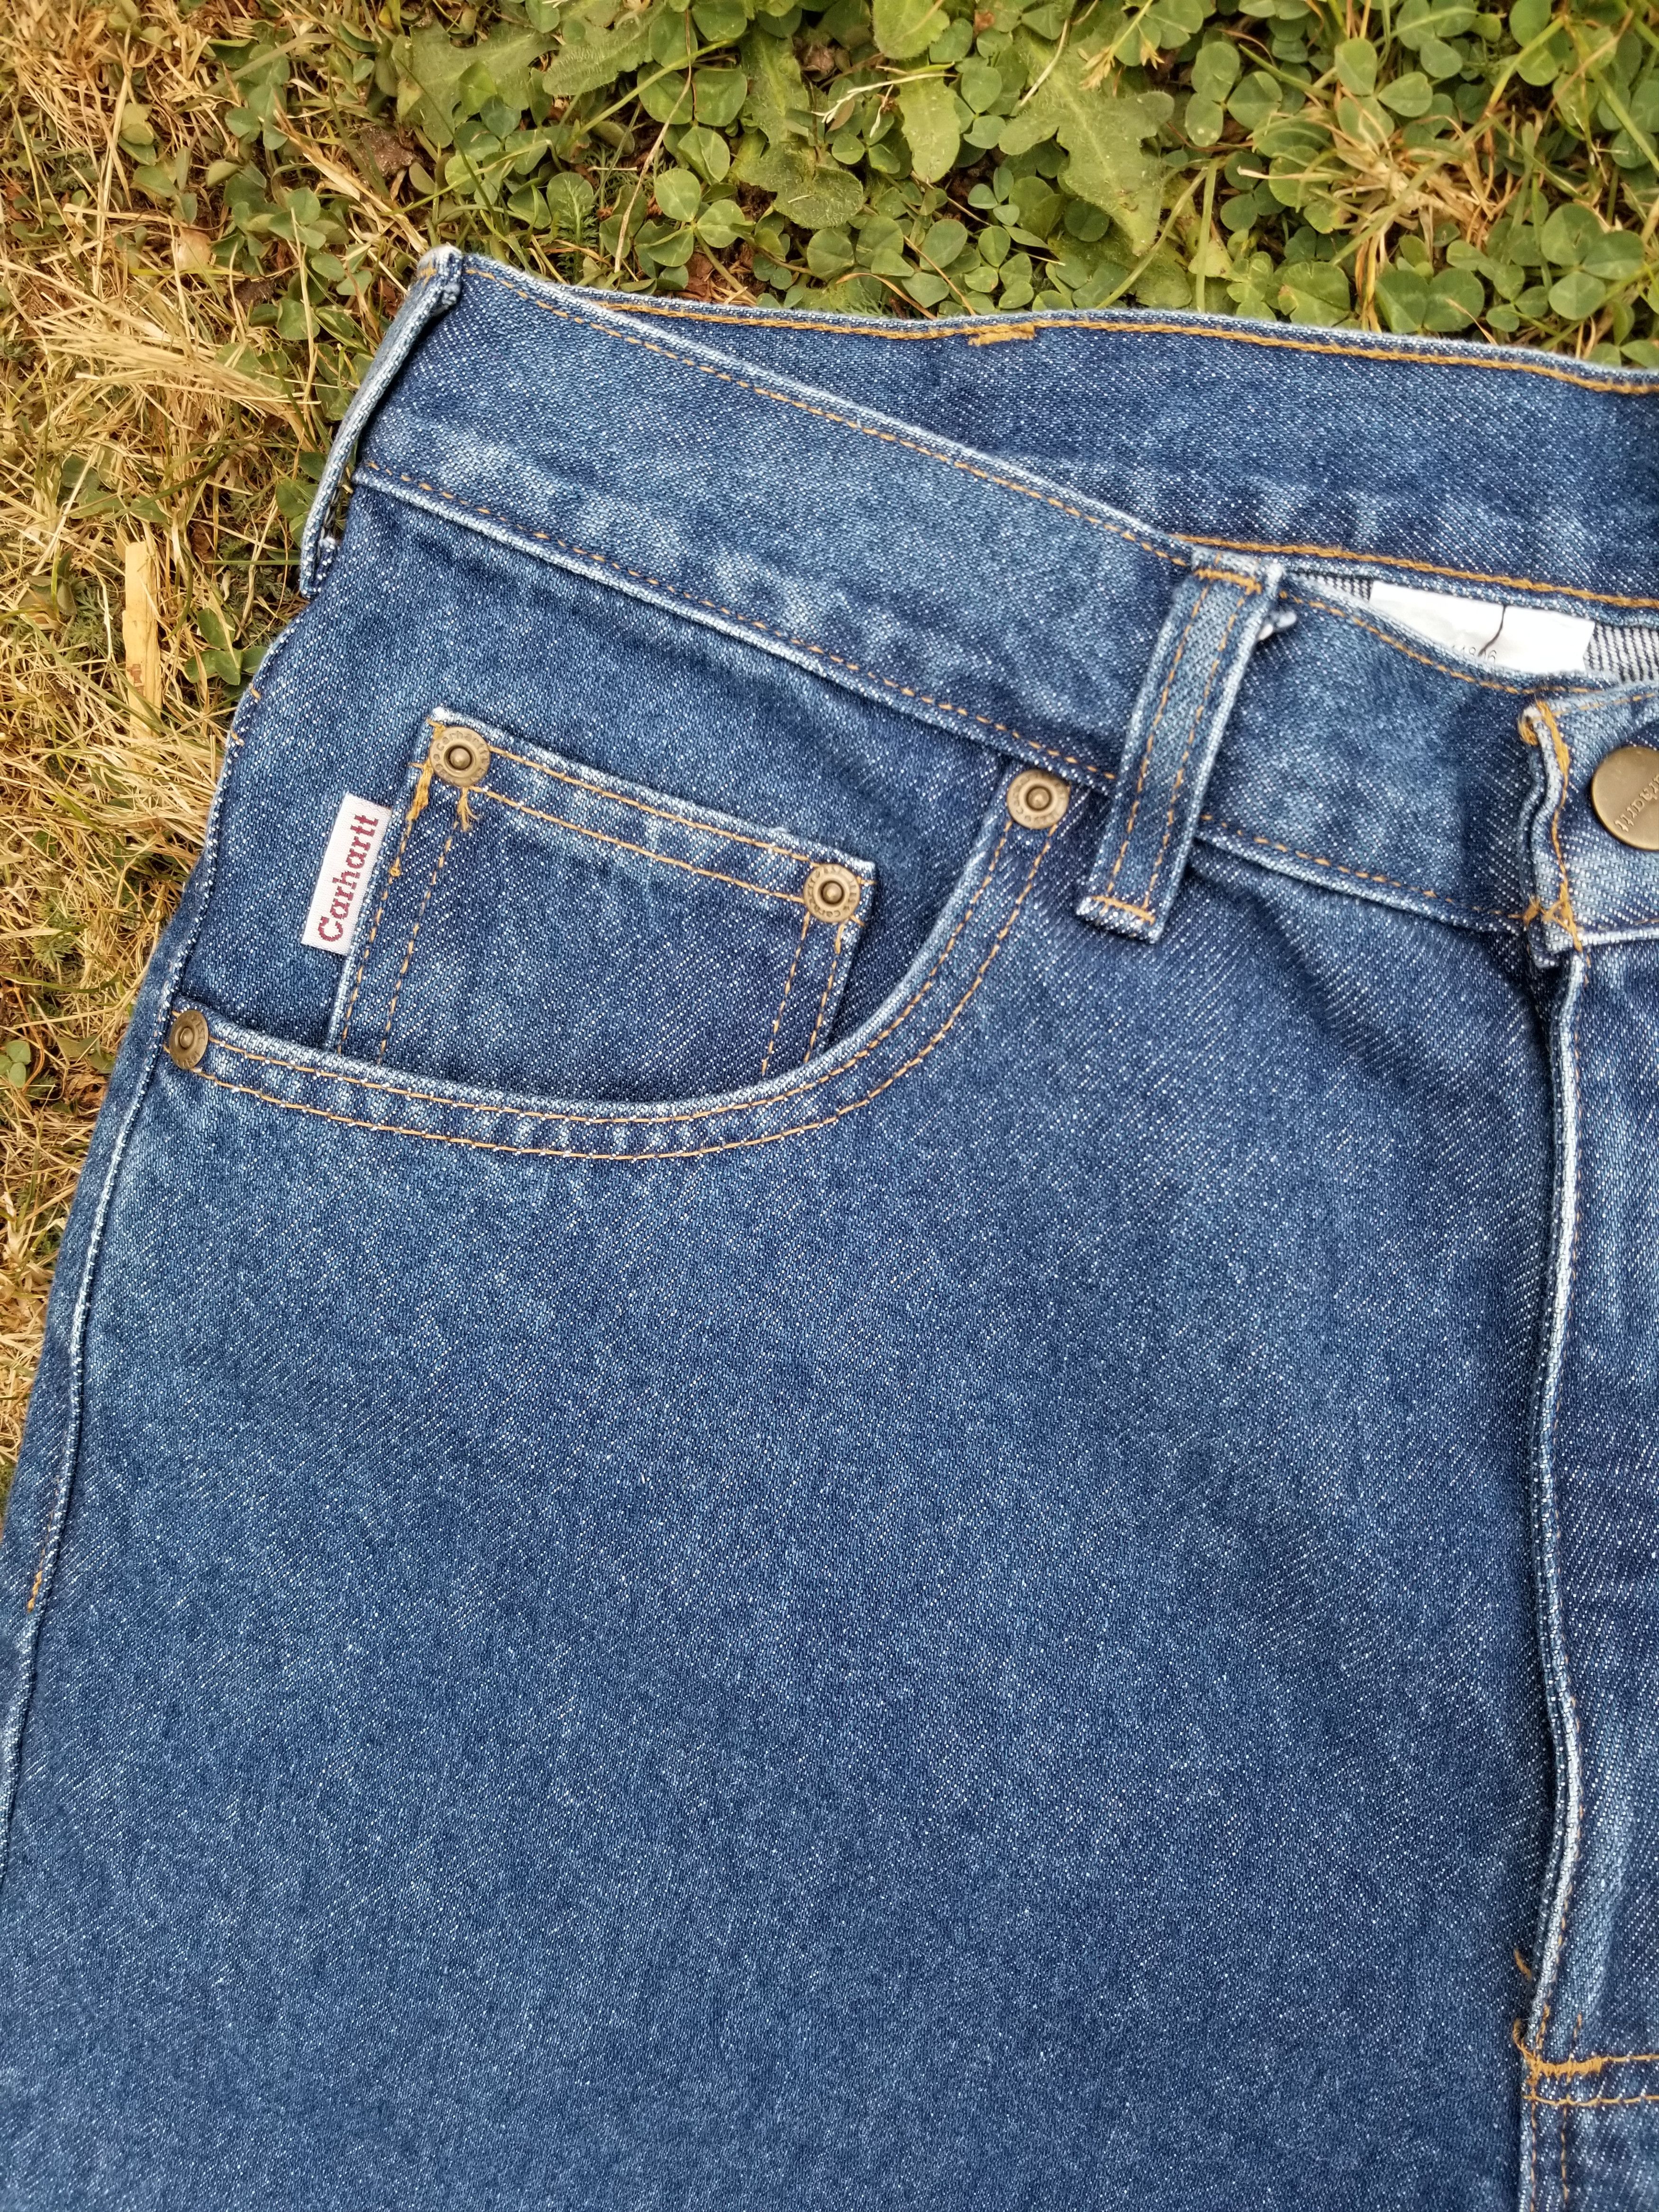 Vintage Vintage CARHARTT Relaxed Fit Blue Denim Jeans 501 Size US 34 / EU 50 - 5 Preview